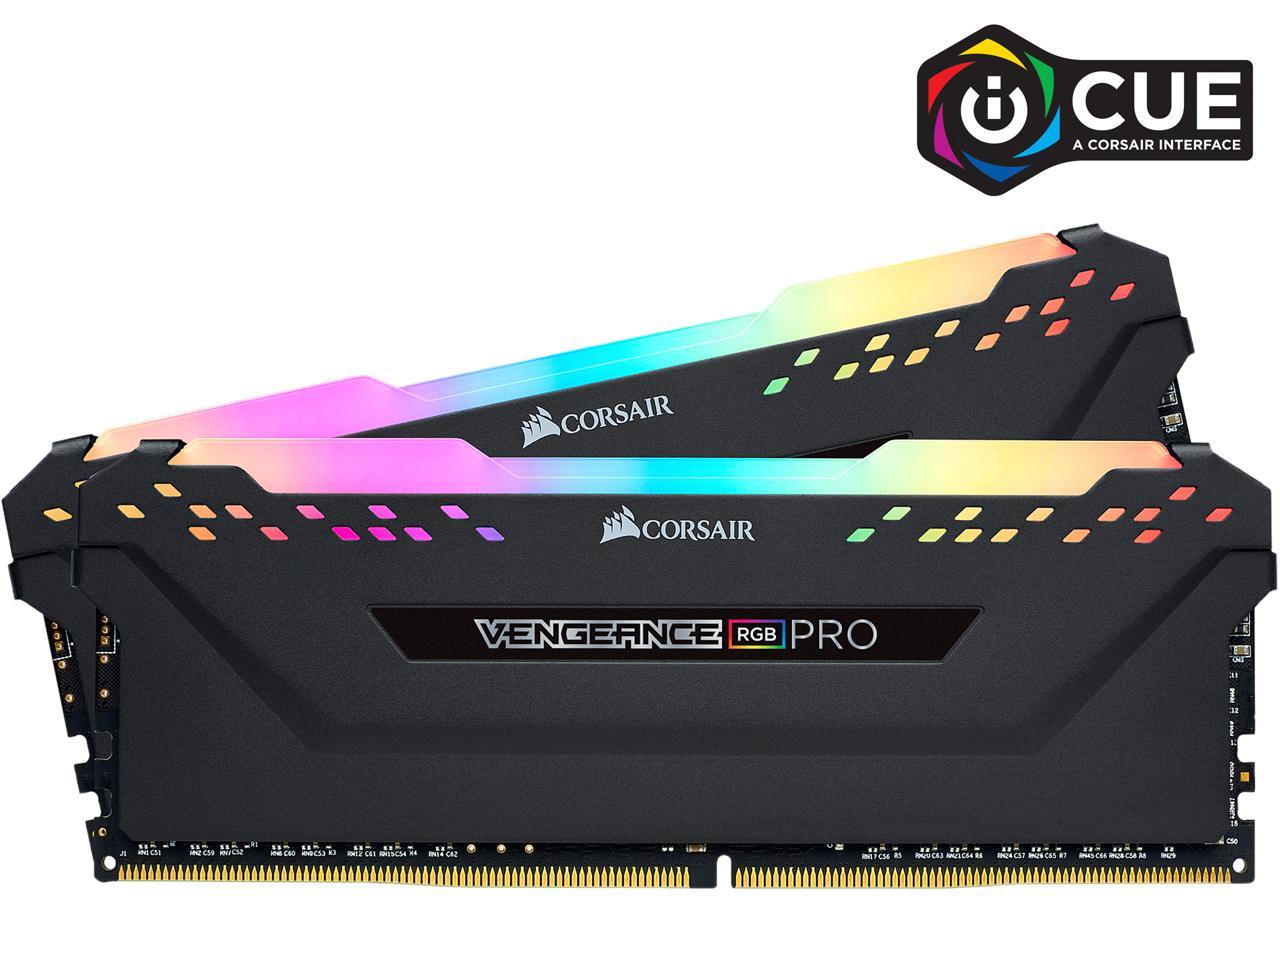 32GB (2x 16) CORSAIR Vengeance RGB Pro DDR4 3600 Desktop RAM kit @Newegg $163